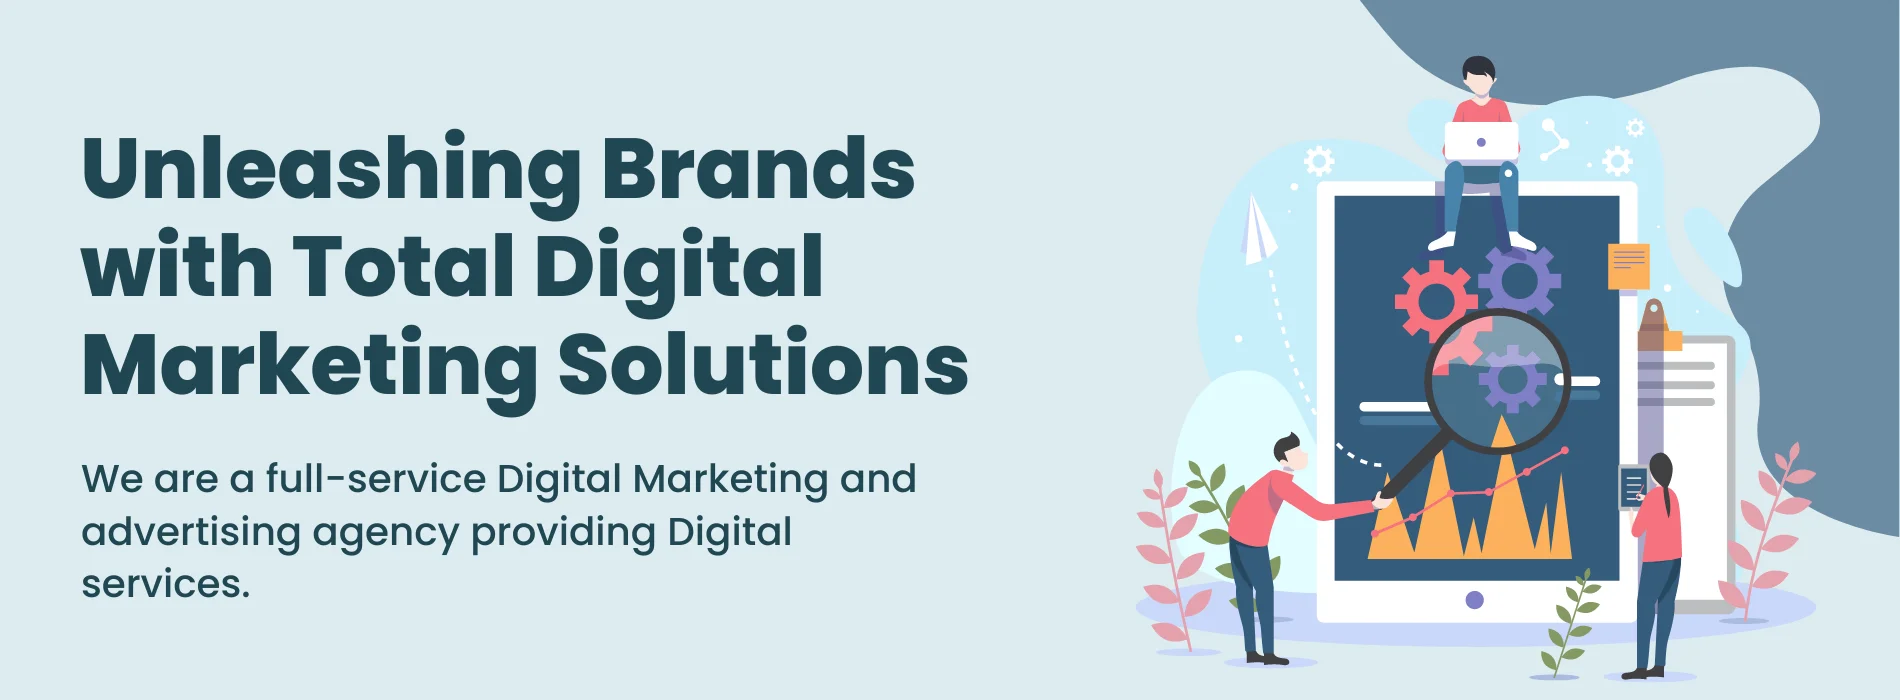 Total Digital Marketing Solution